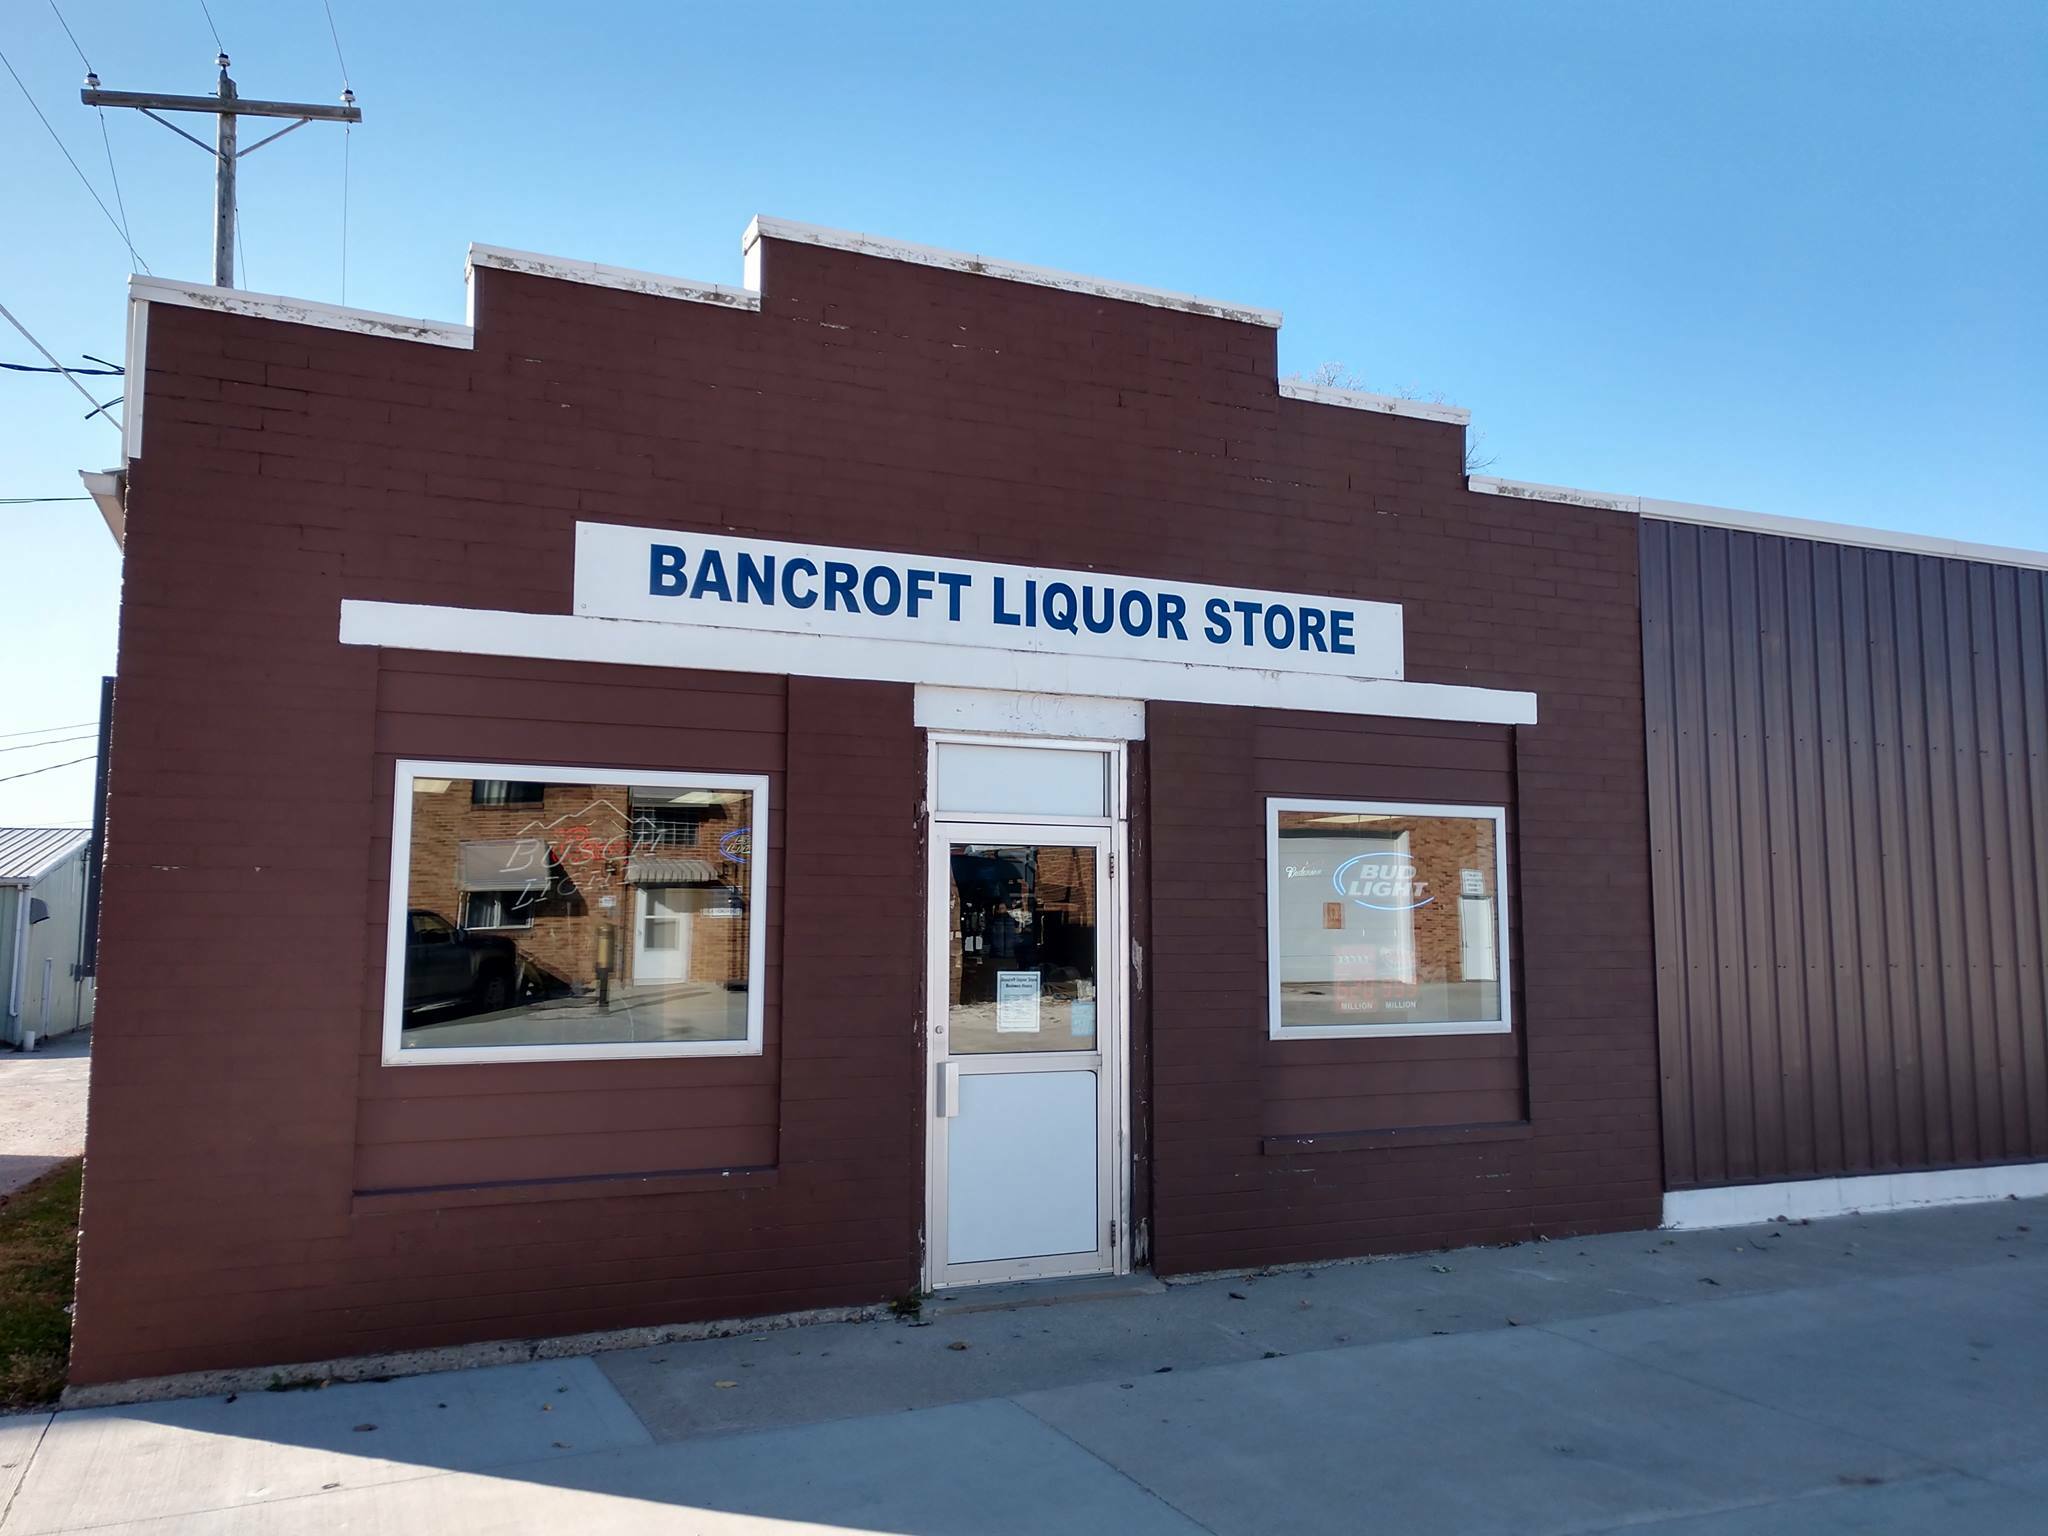 Bancroft Liquor Store